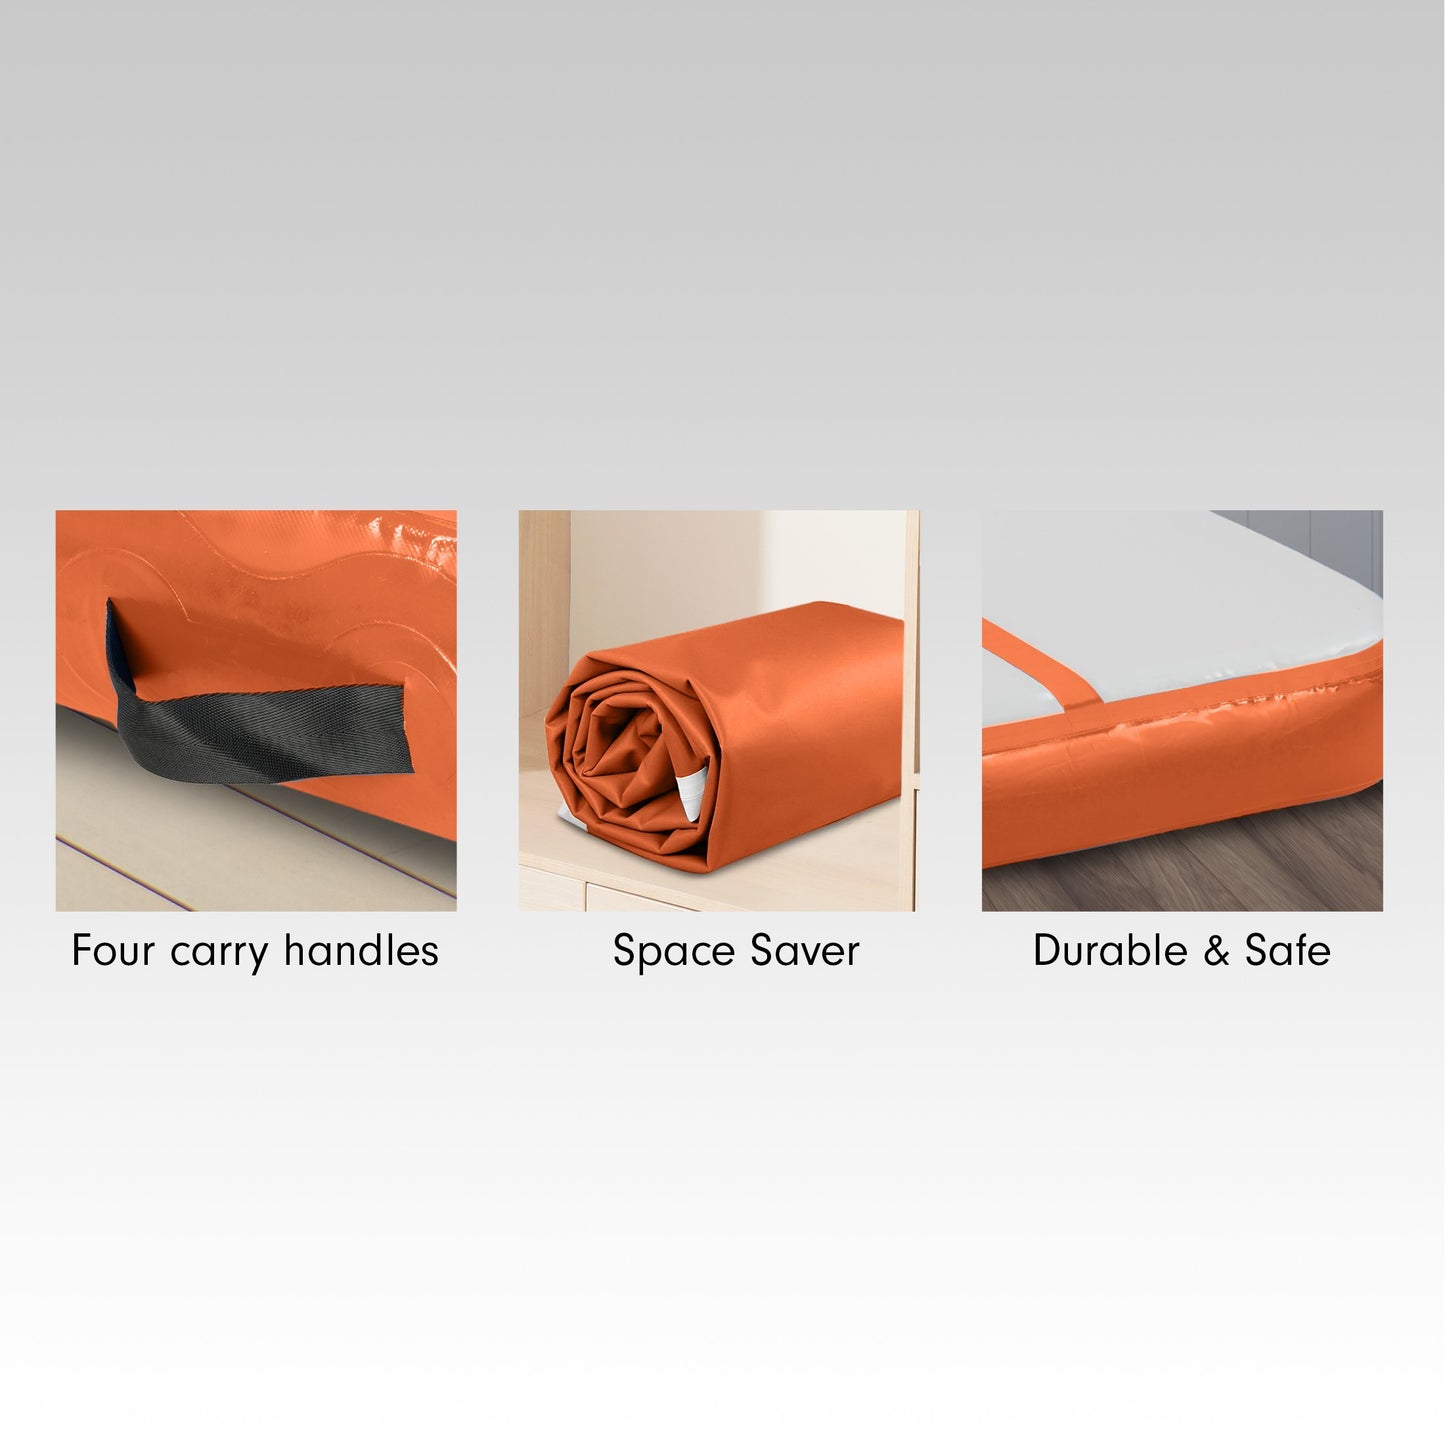 4m x 1m Air Track Inflatable Gymnastics Tumbling Mat - Orange